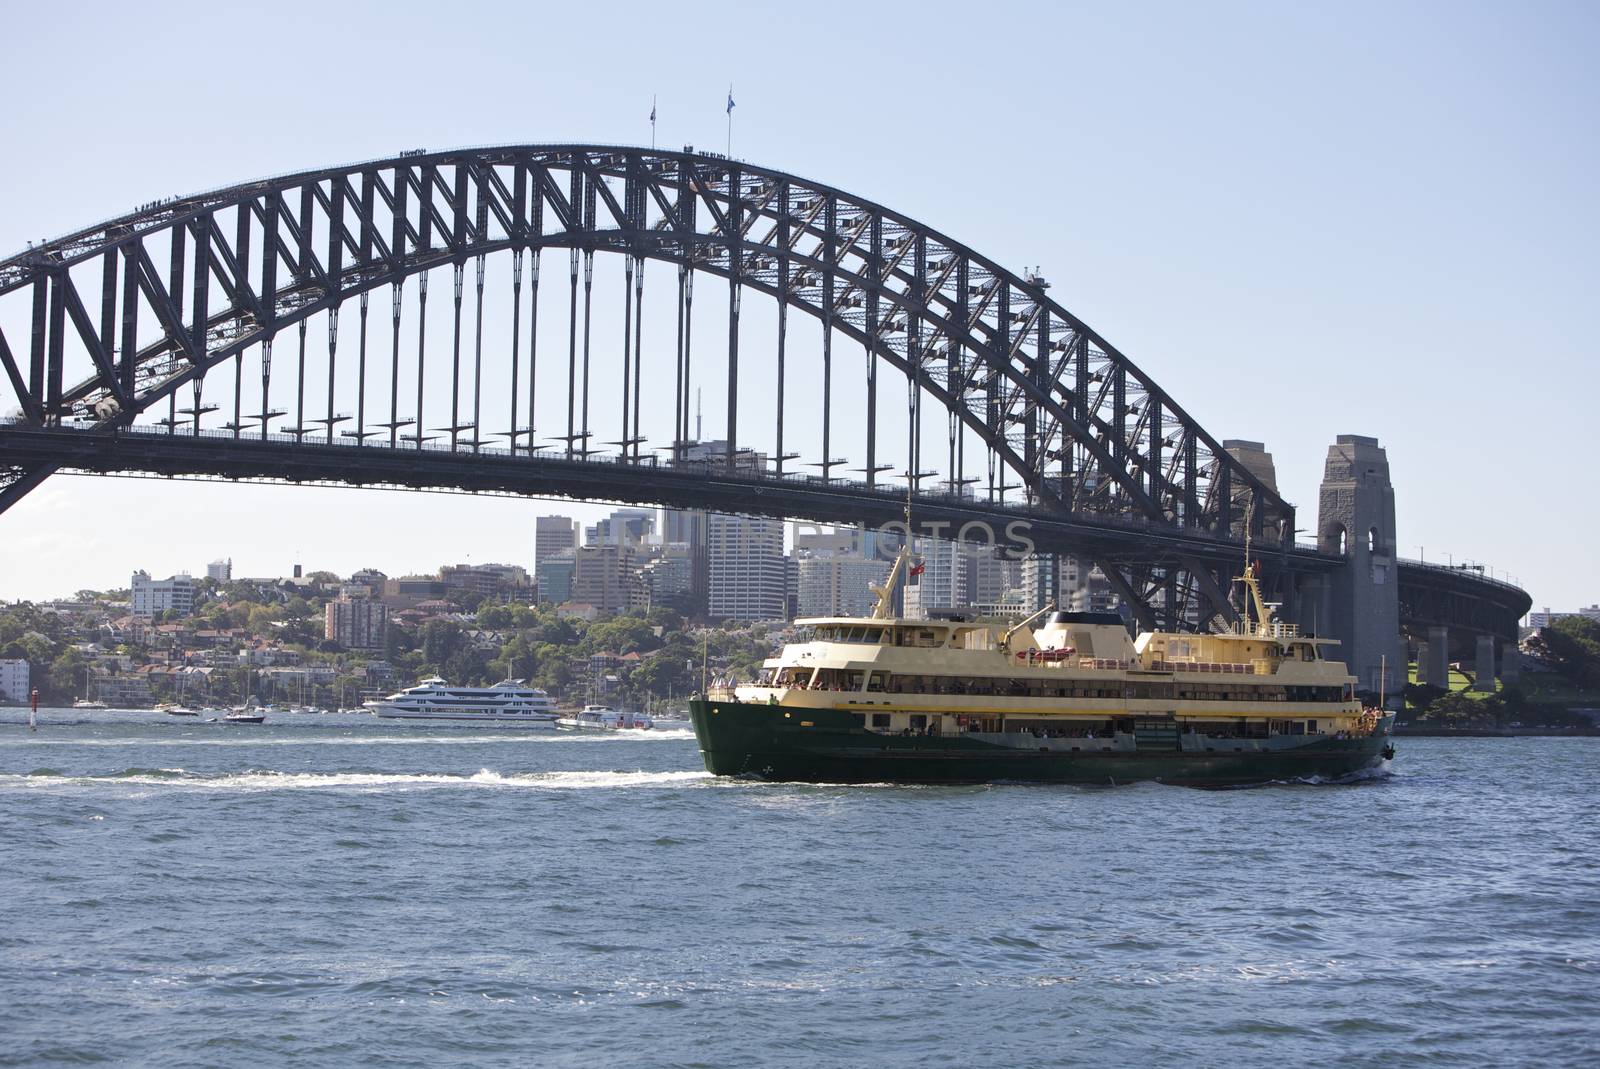 Famous Sydney Harbour Bridge and Ferry Boat in Sydney, Australai